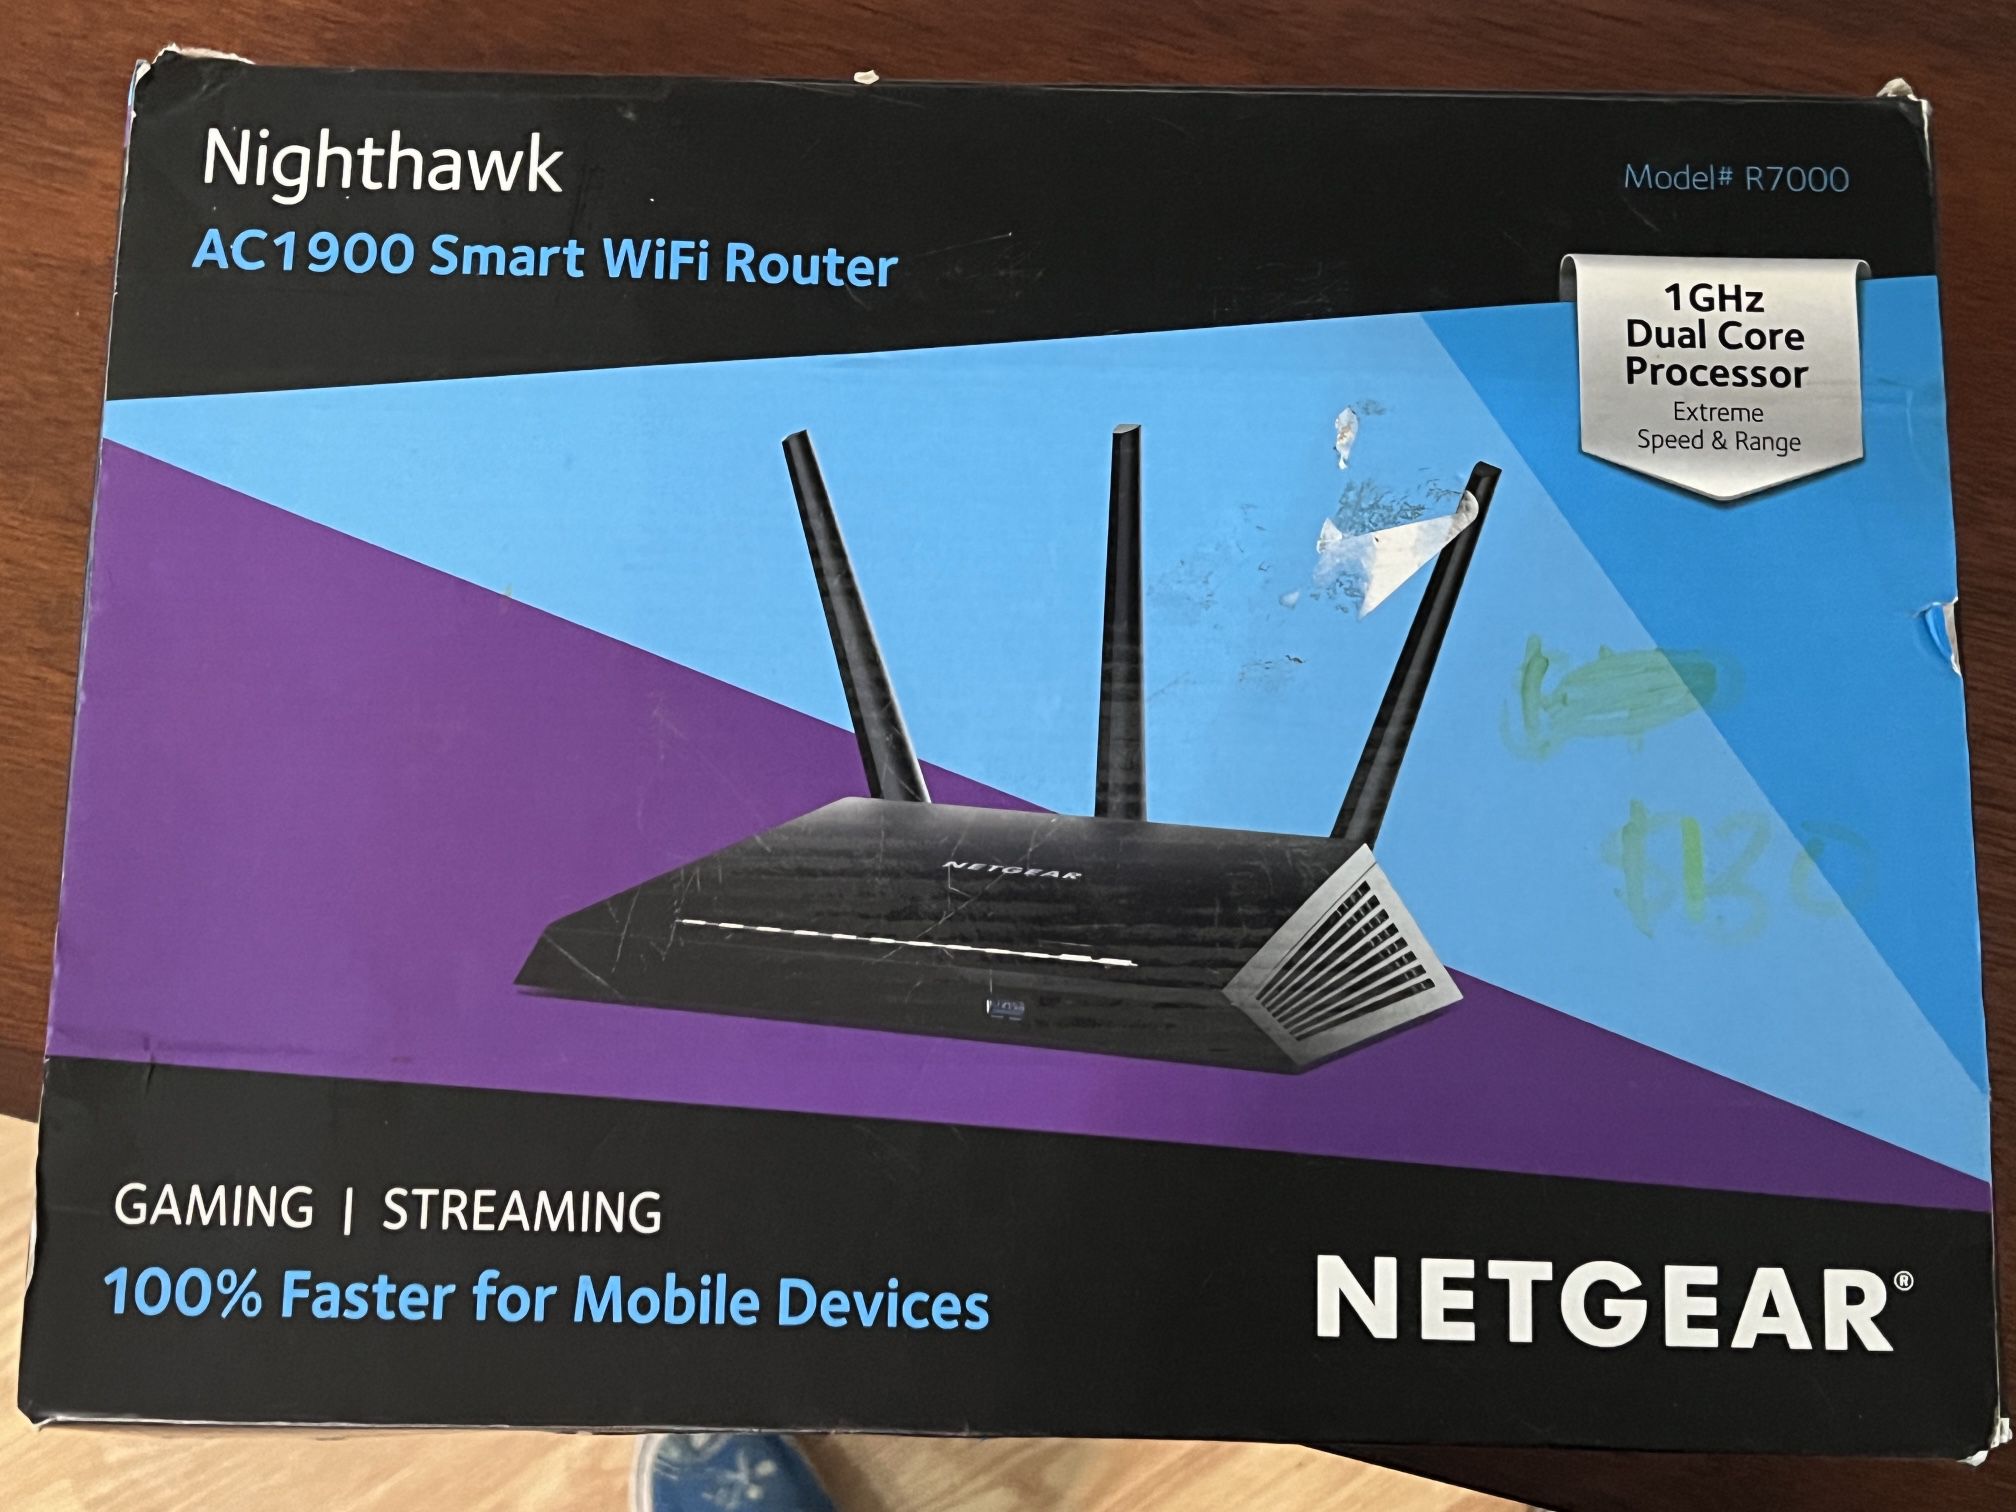 NETGEAR Nighthawk Smart Wi-Fi Router  For Gaming 